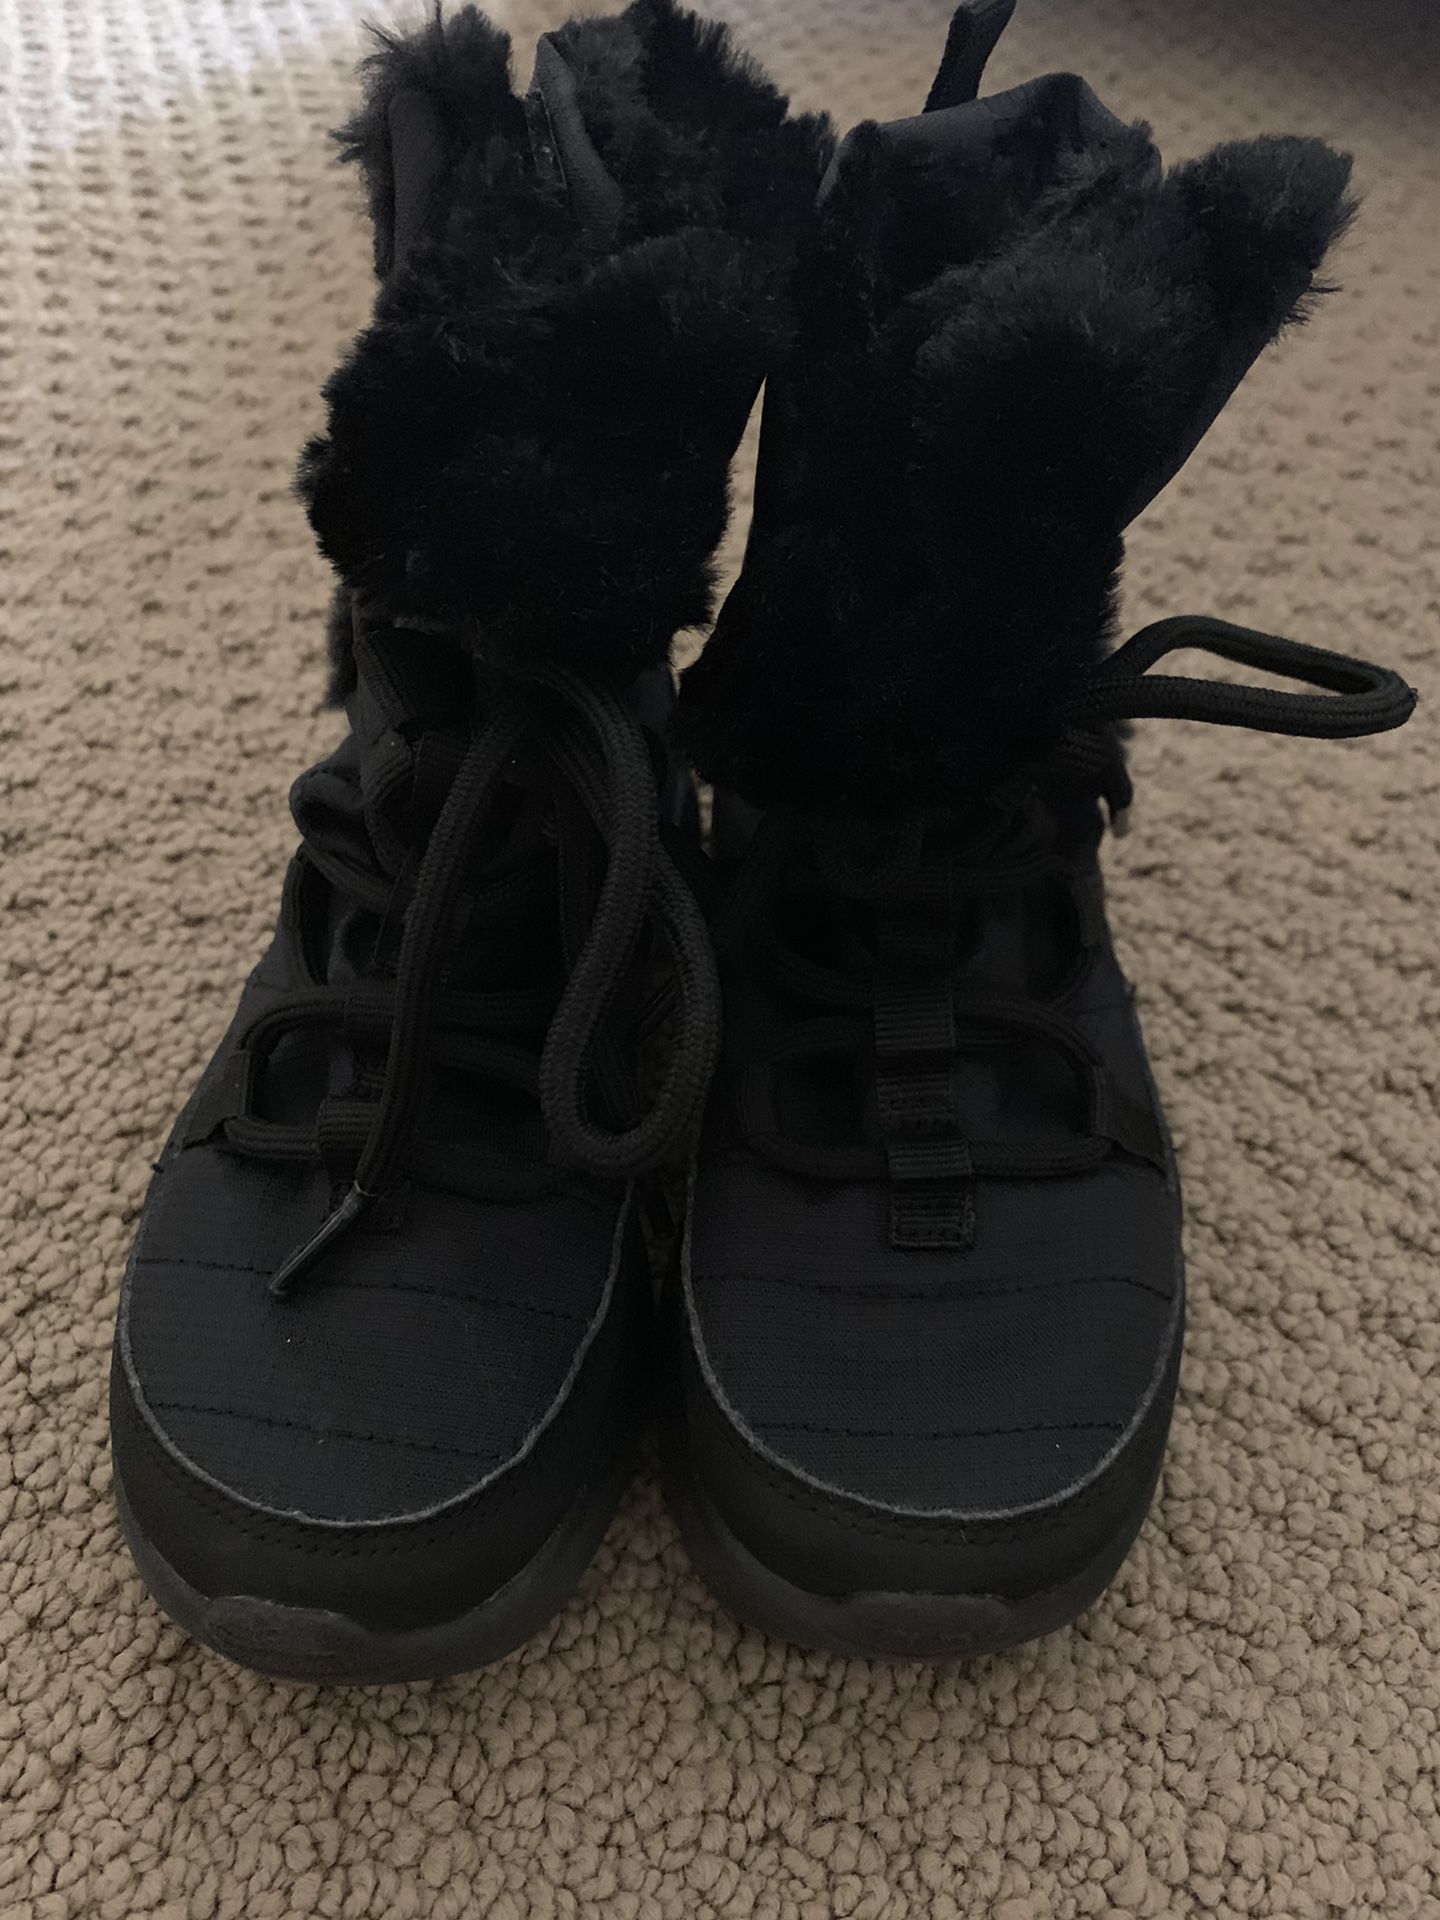 Nike toddler snow boots sz 10